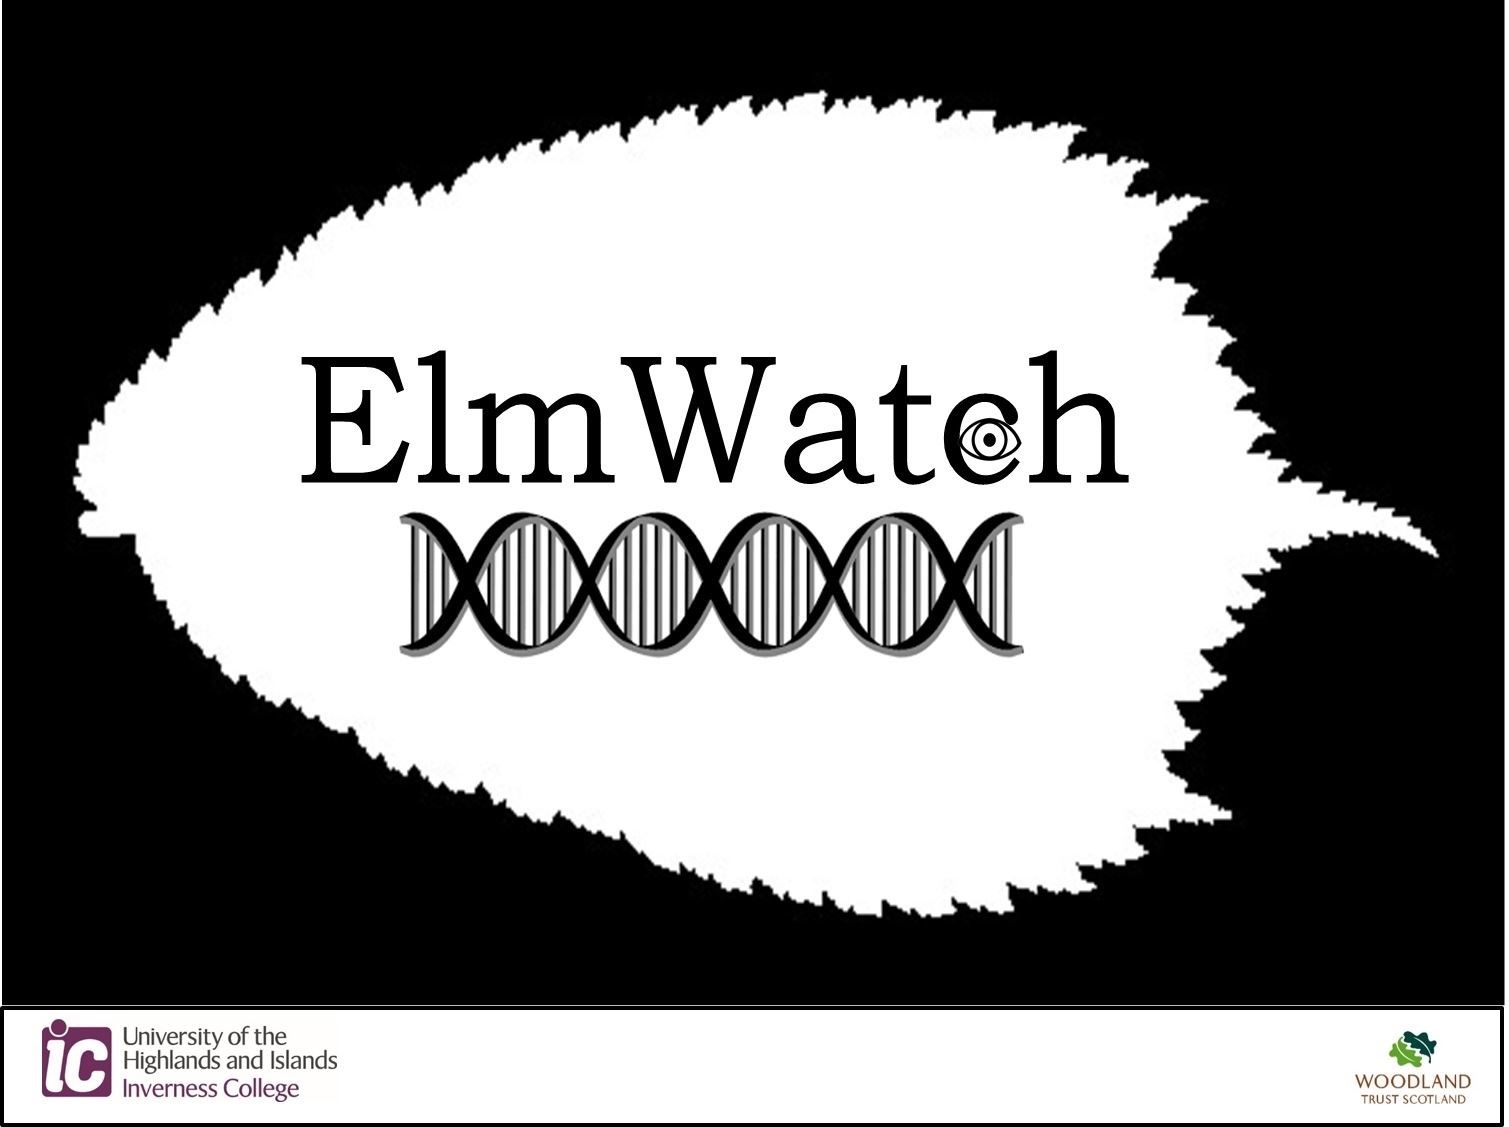 Elm Watch